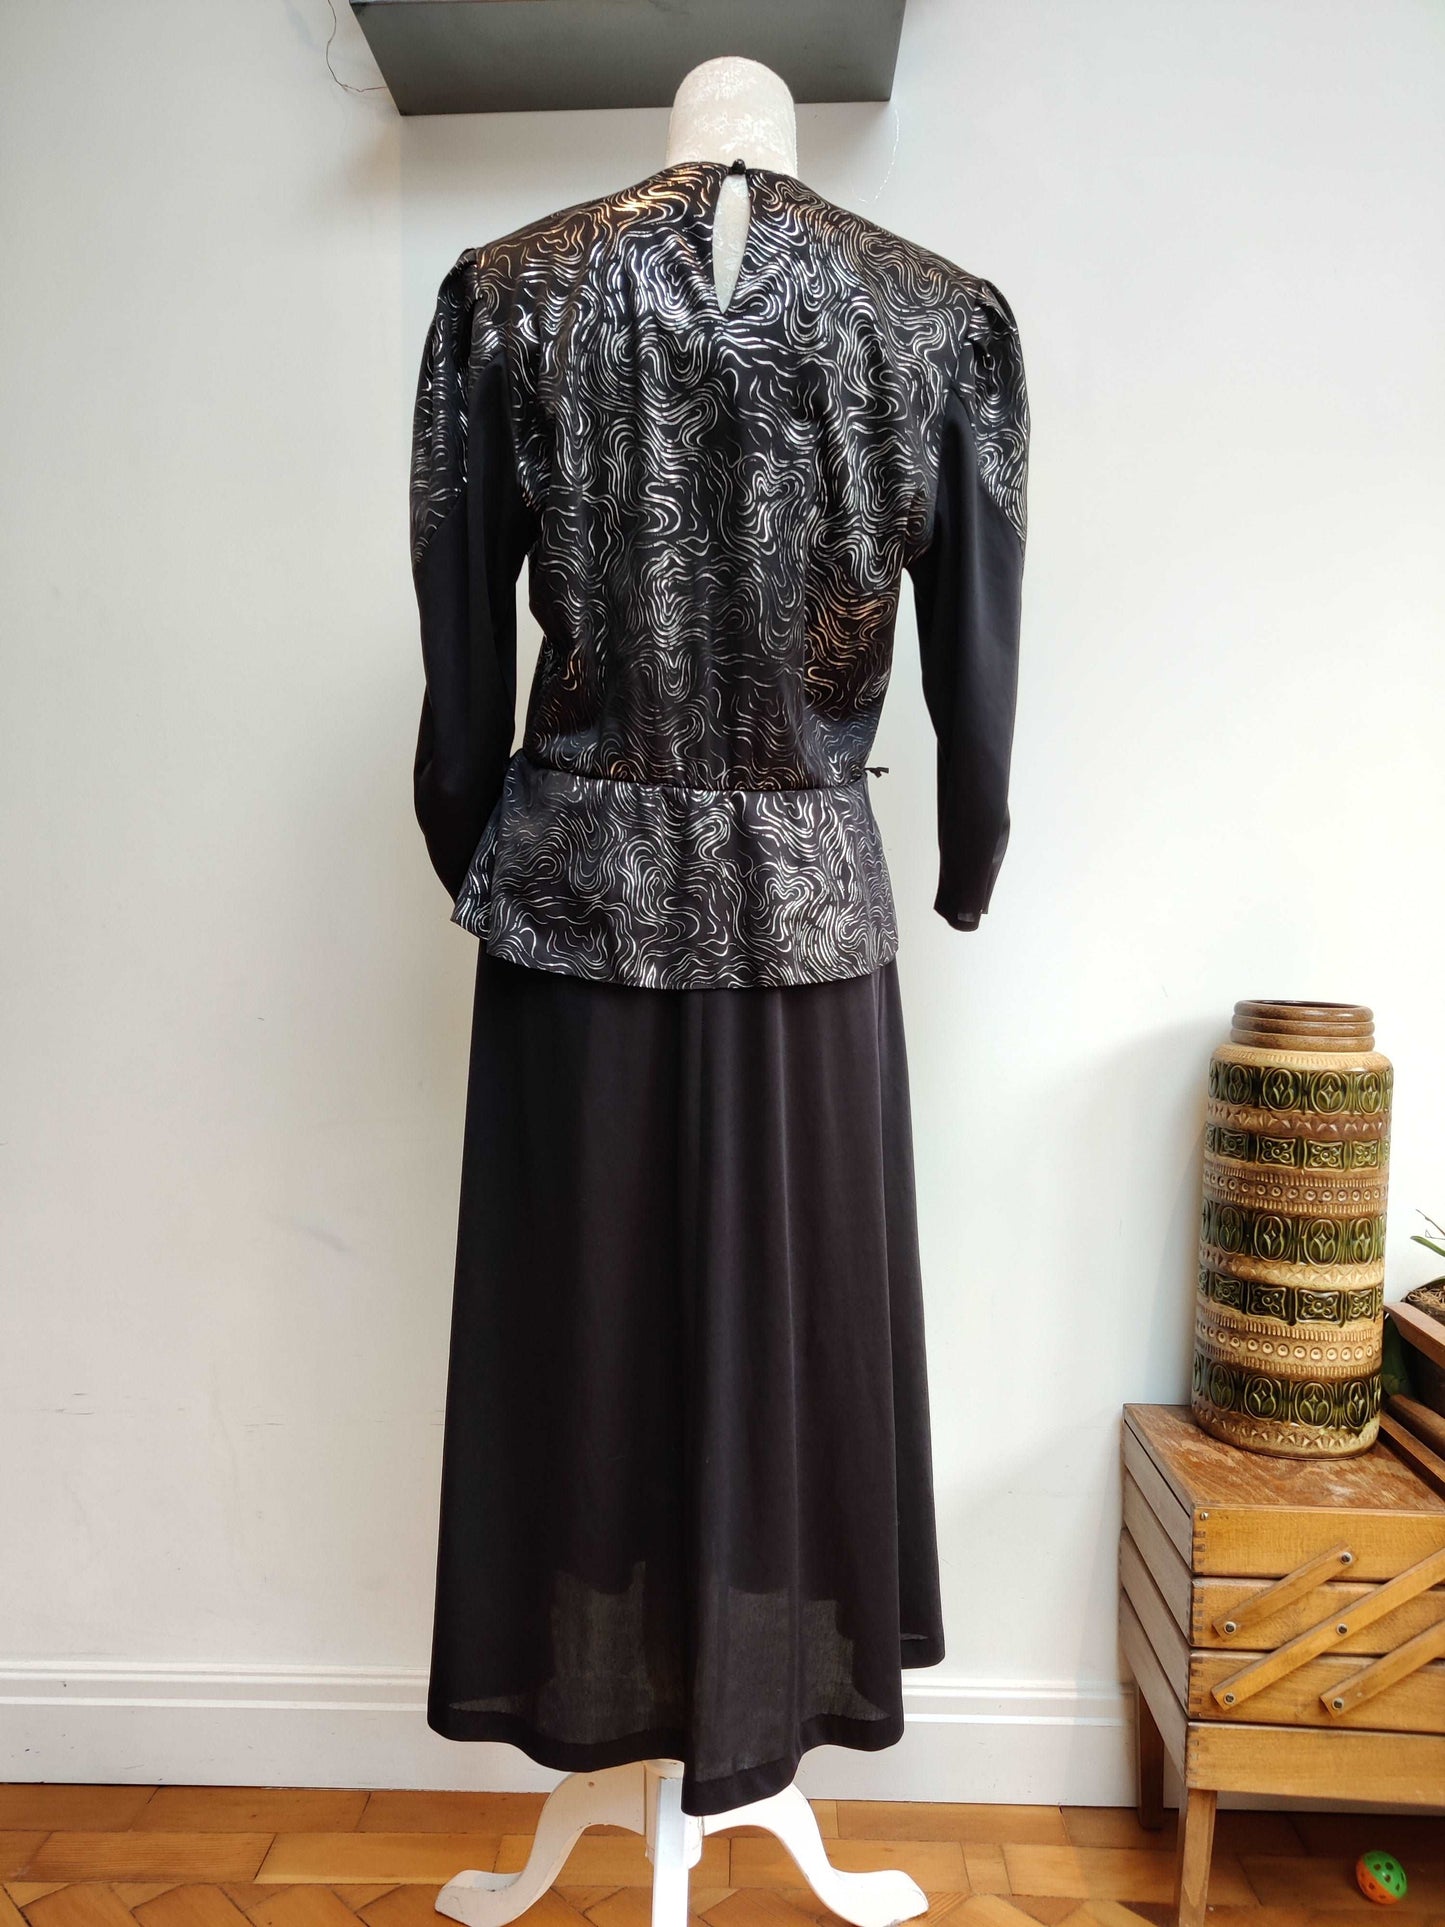 Peplum vintage dress with 3/4 sleeves